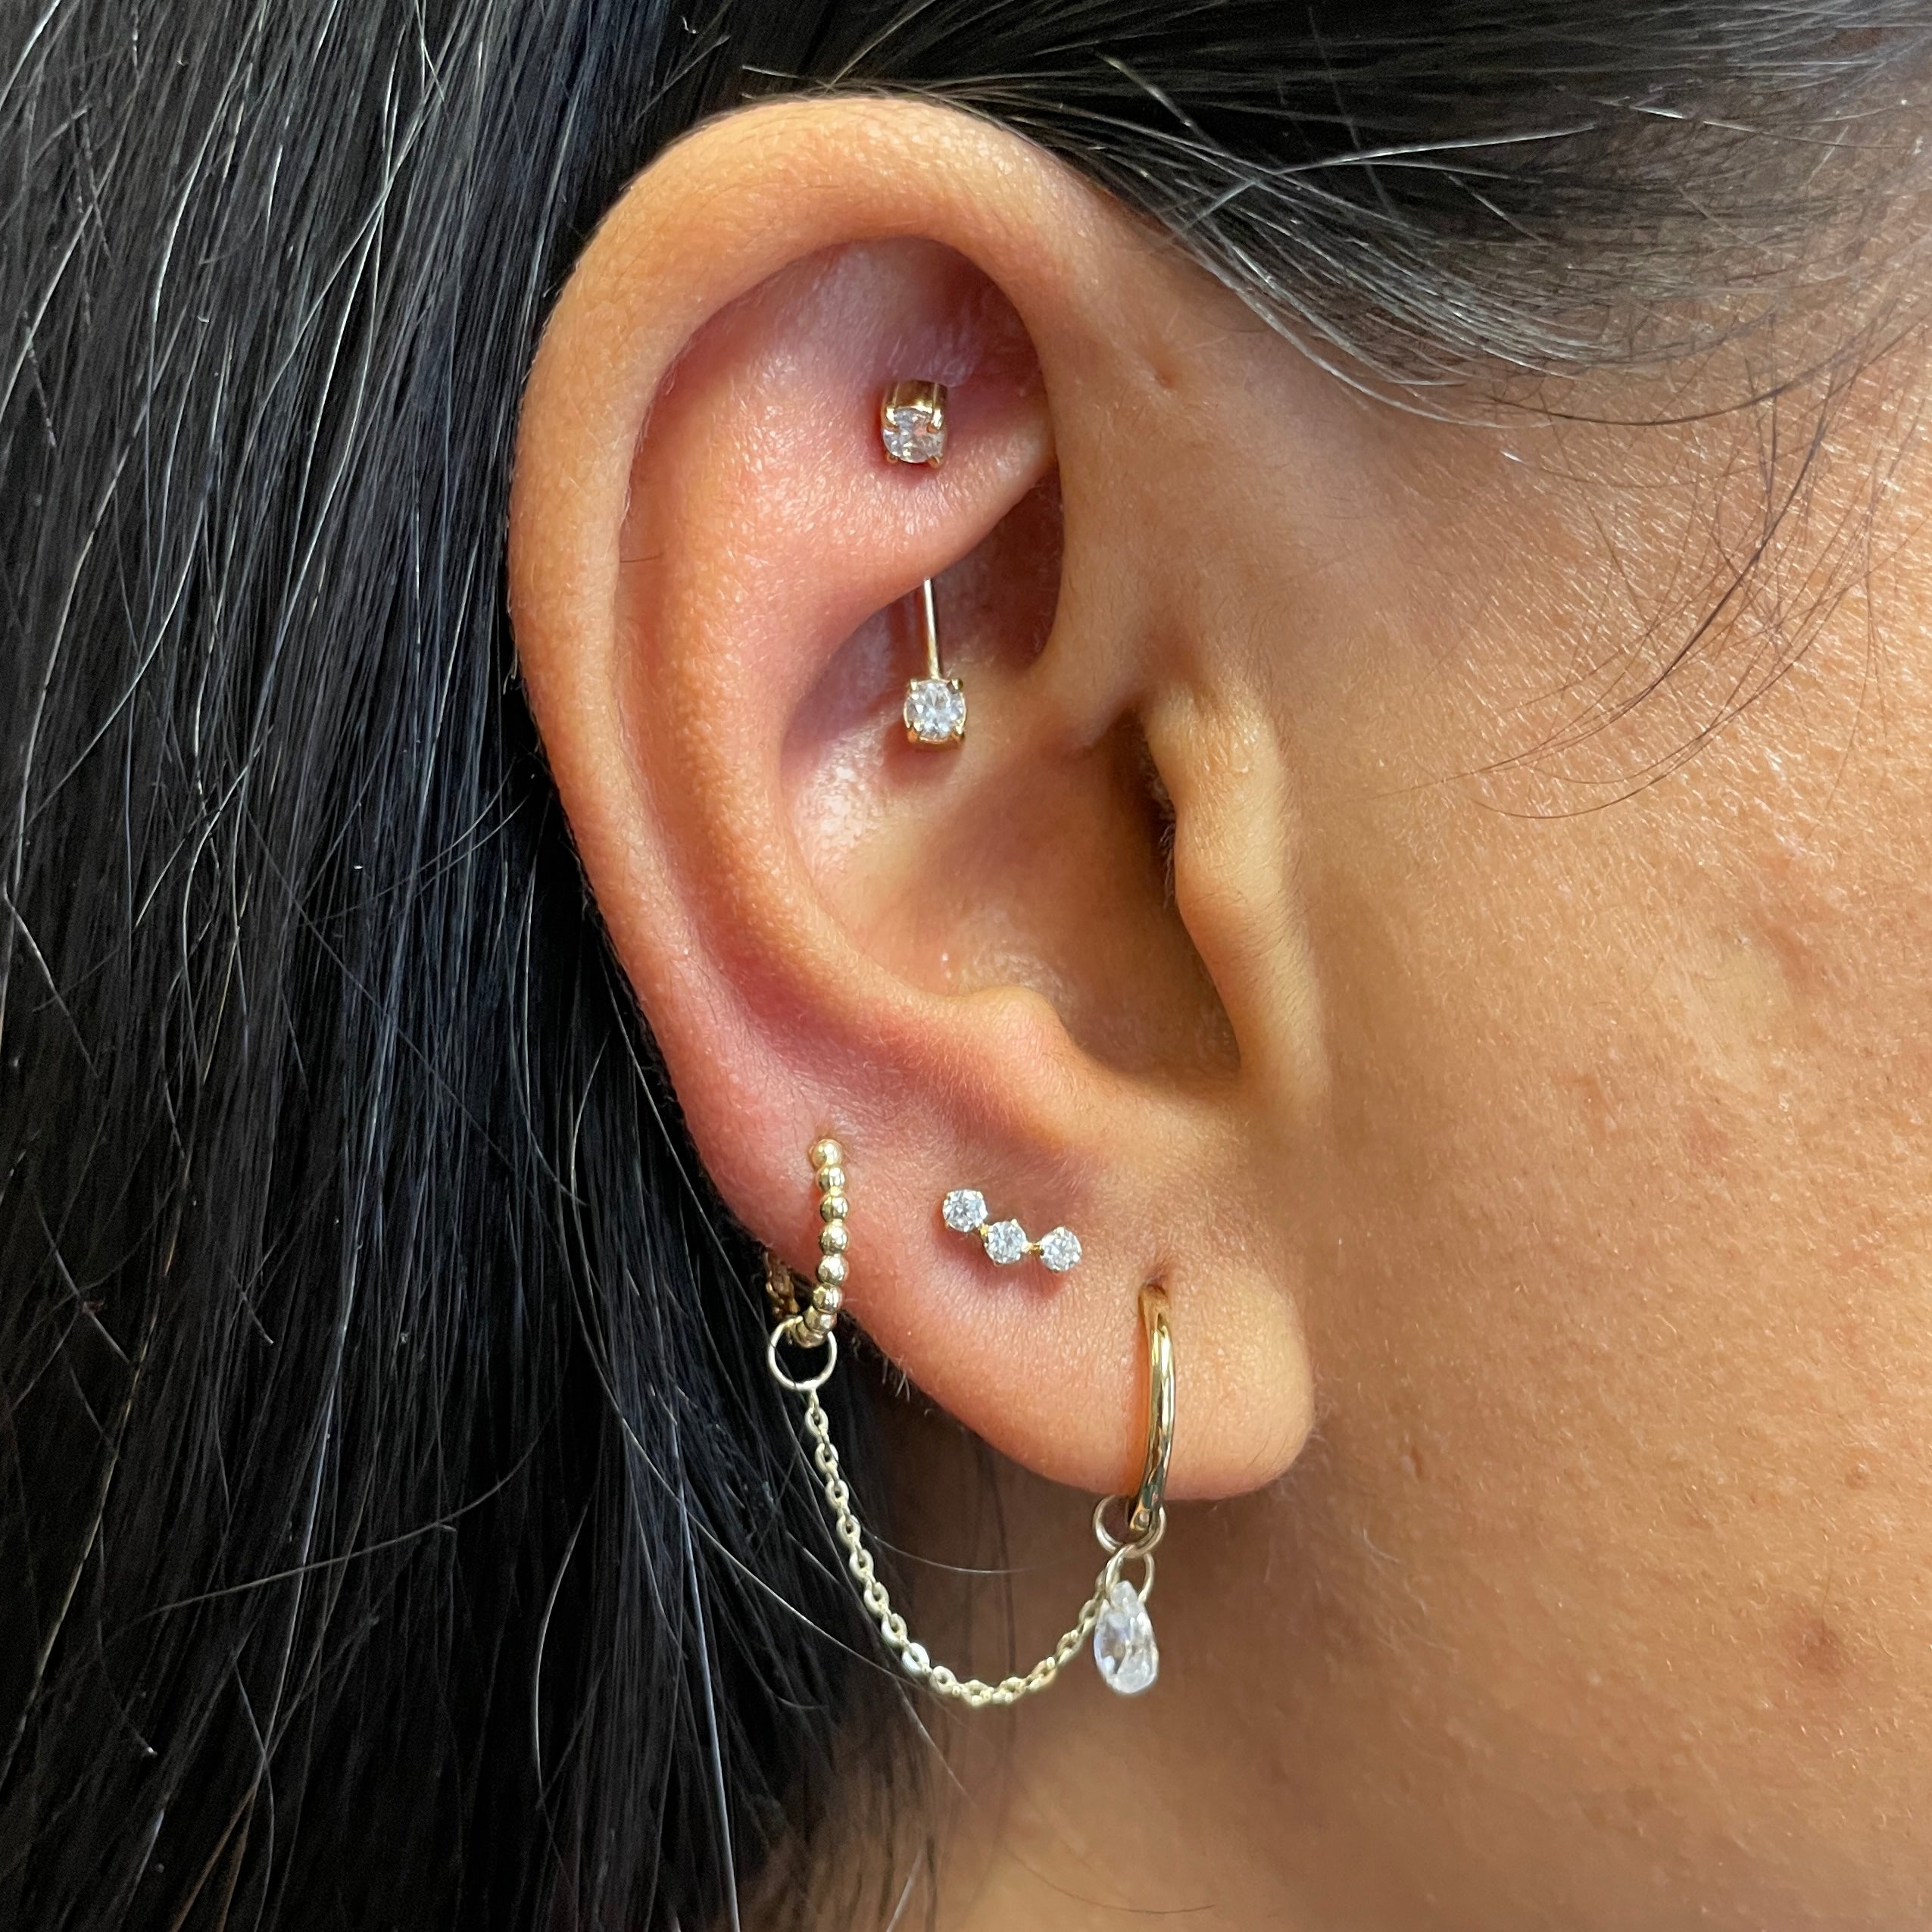 18ct Solid Gold 6mm Cartilage Hoop Earrings | Auric Jewellery